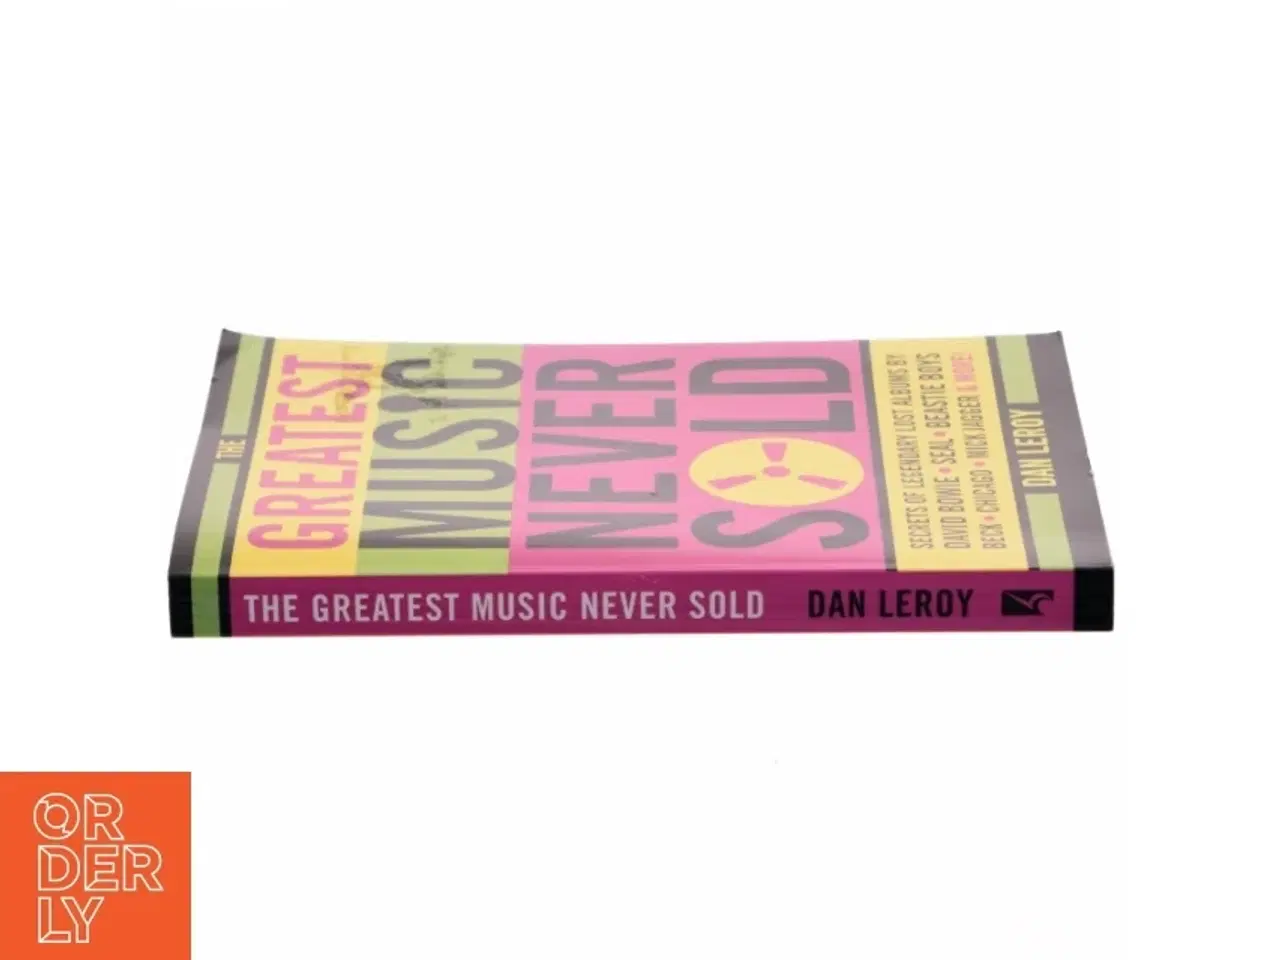 Billede 2 - The greatest music never sold : secrets of legendary lost albums by David Bowie, Seal, Beastie Boys, Beck, Chicago, Mick Jagger & more! af Dan LeRoy (